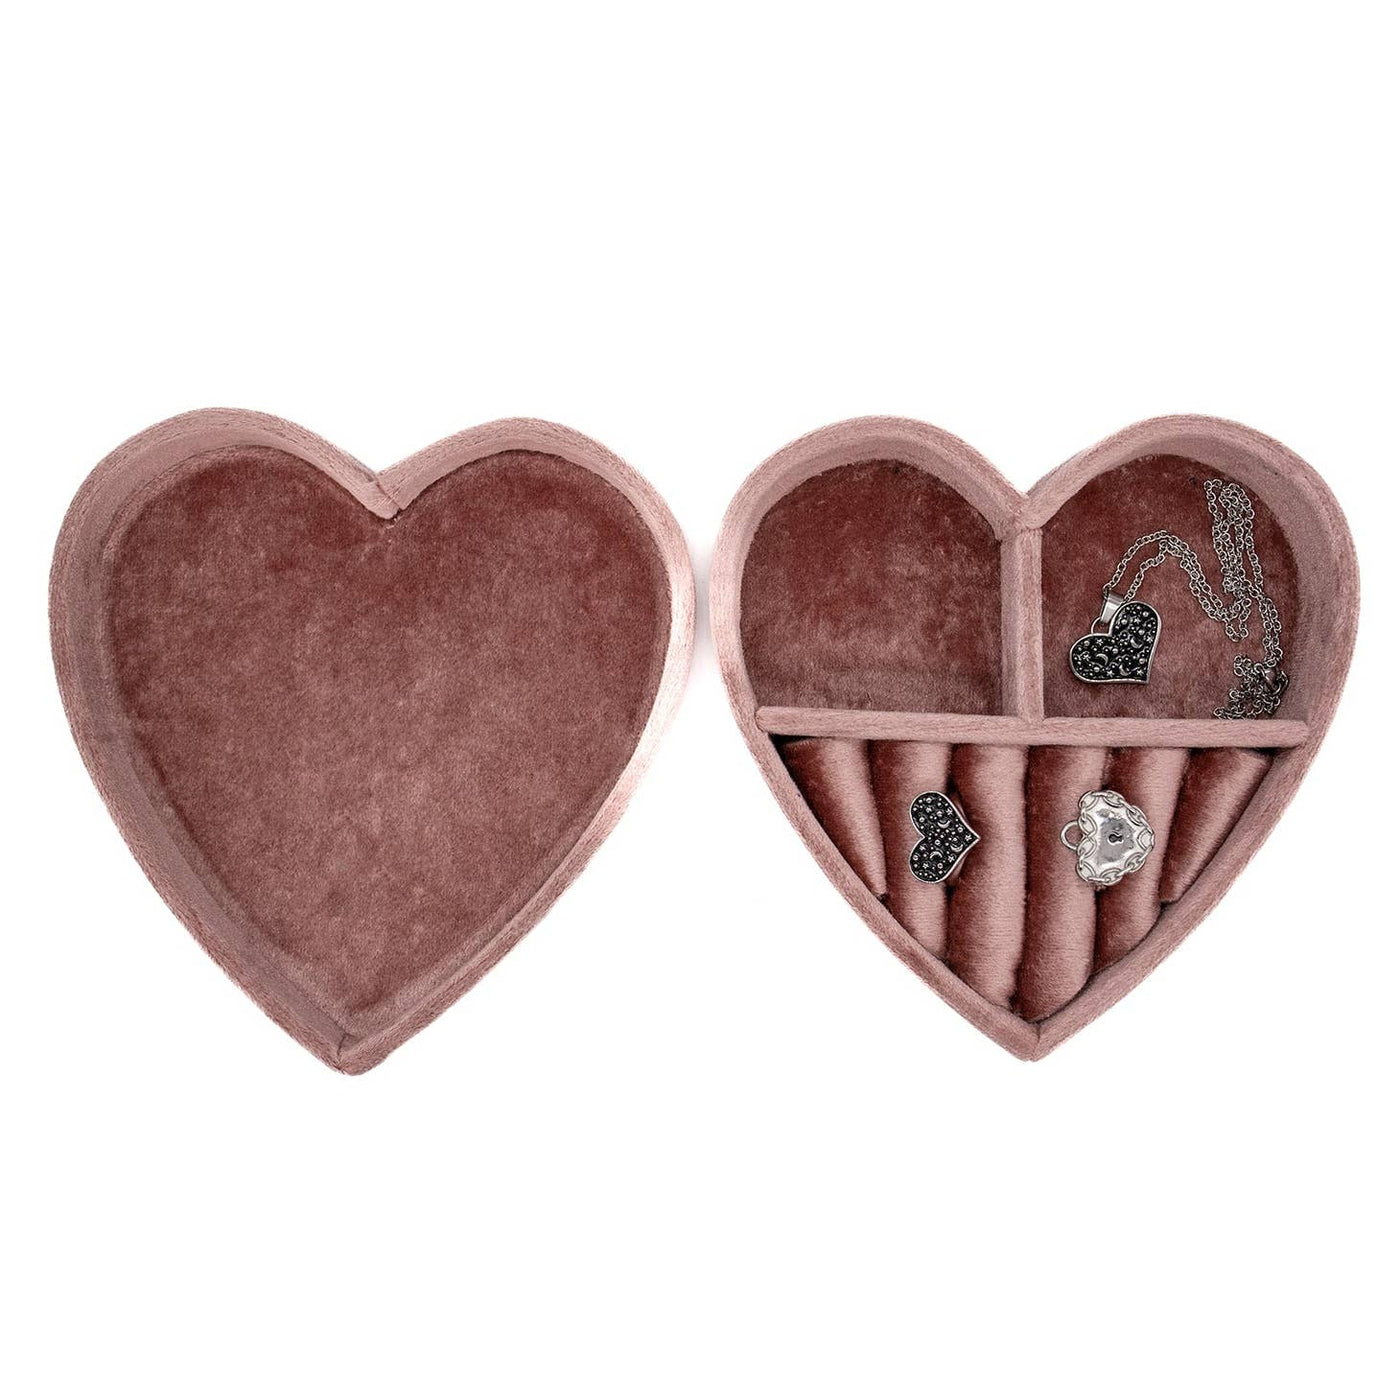 Dusty Rose Velvet Heart Jewelry Box